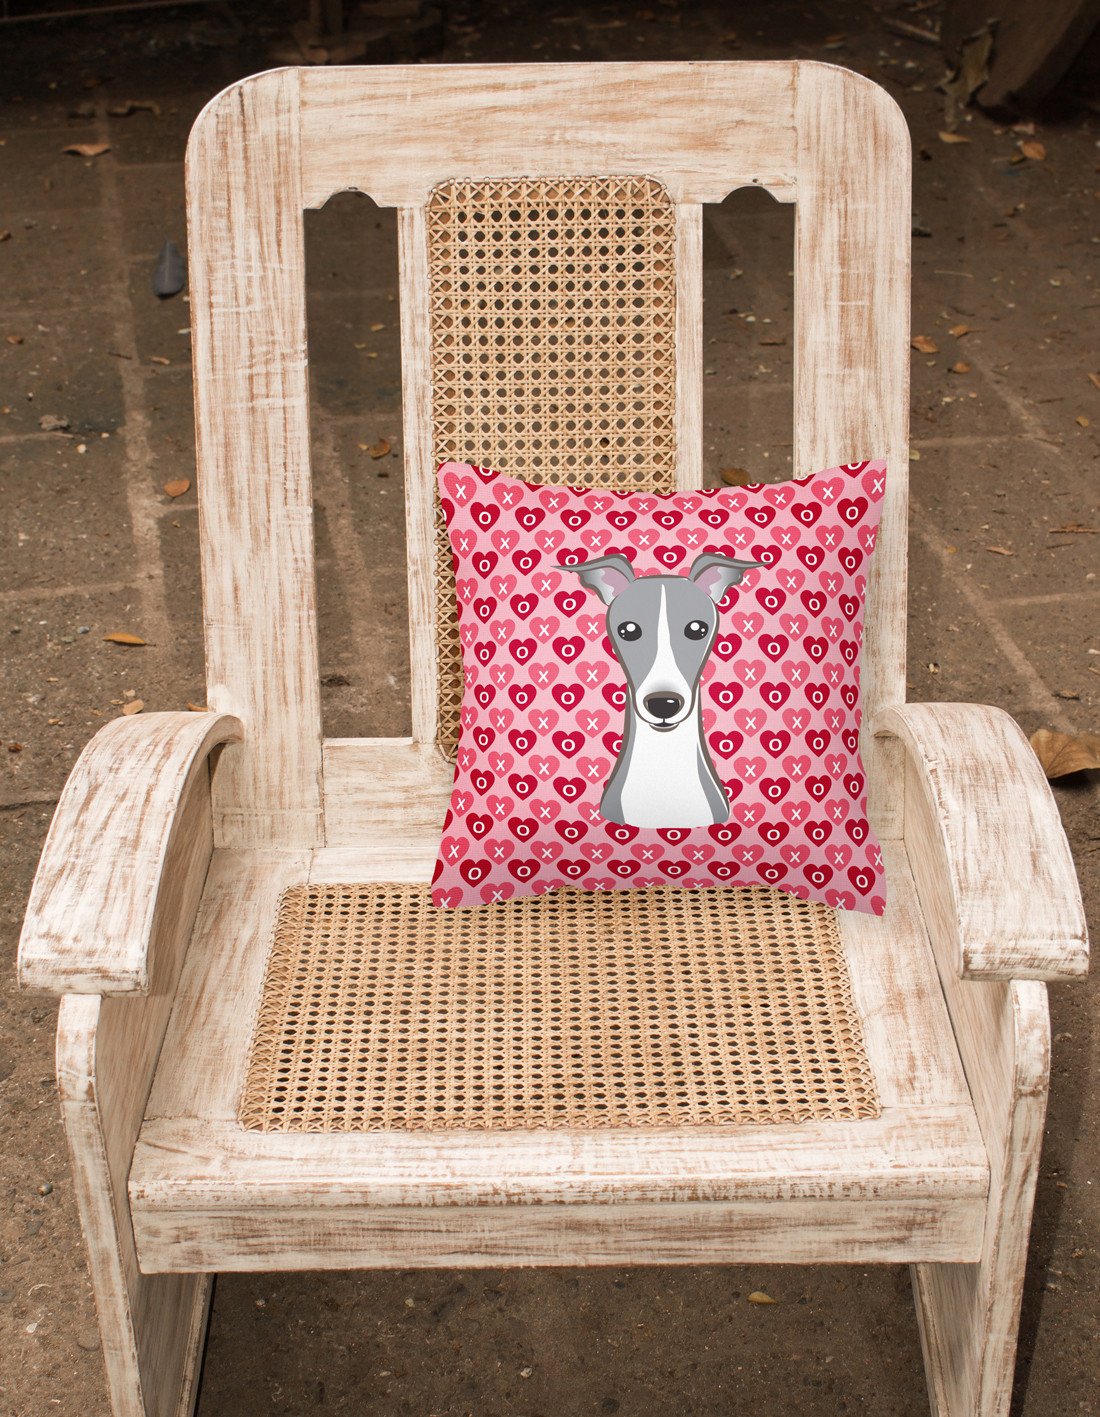 Italian Greyhound Hearts Fabric Decorative Pillow BB5306PW1818 by Caroline's Treasures